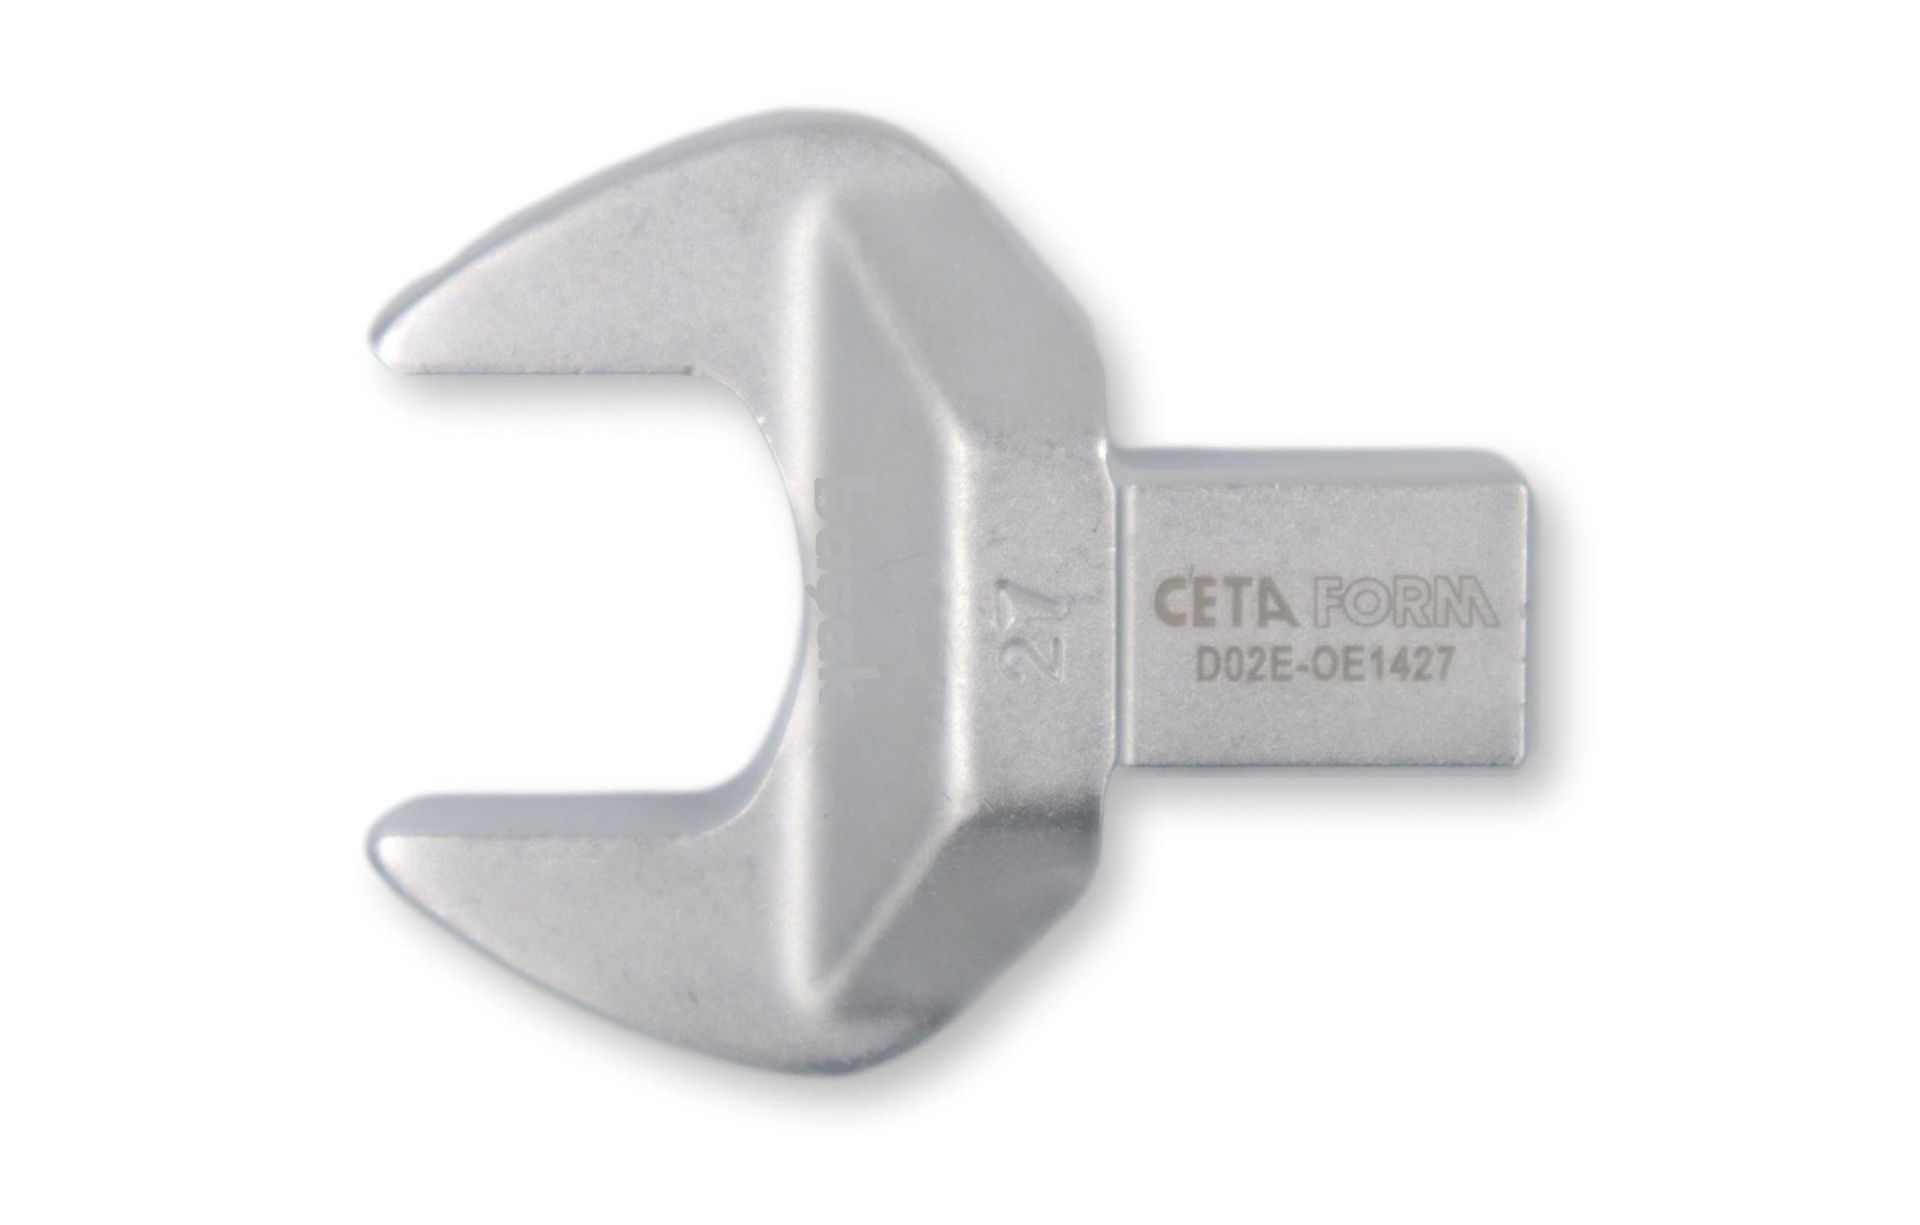 Ceta Form 27mm Açık Ağız Tork Anahtar Ucu (14x18mm) D02E-OE1427